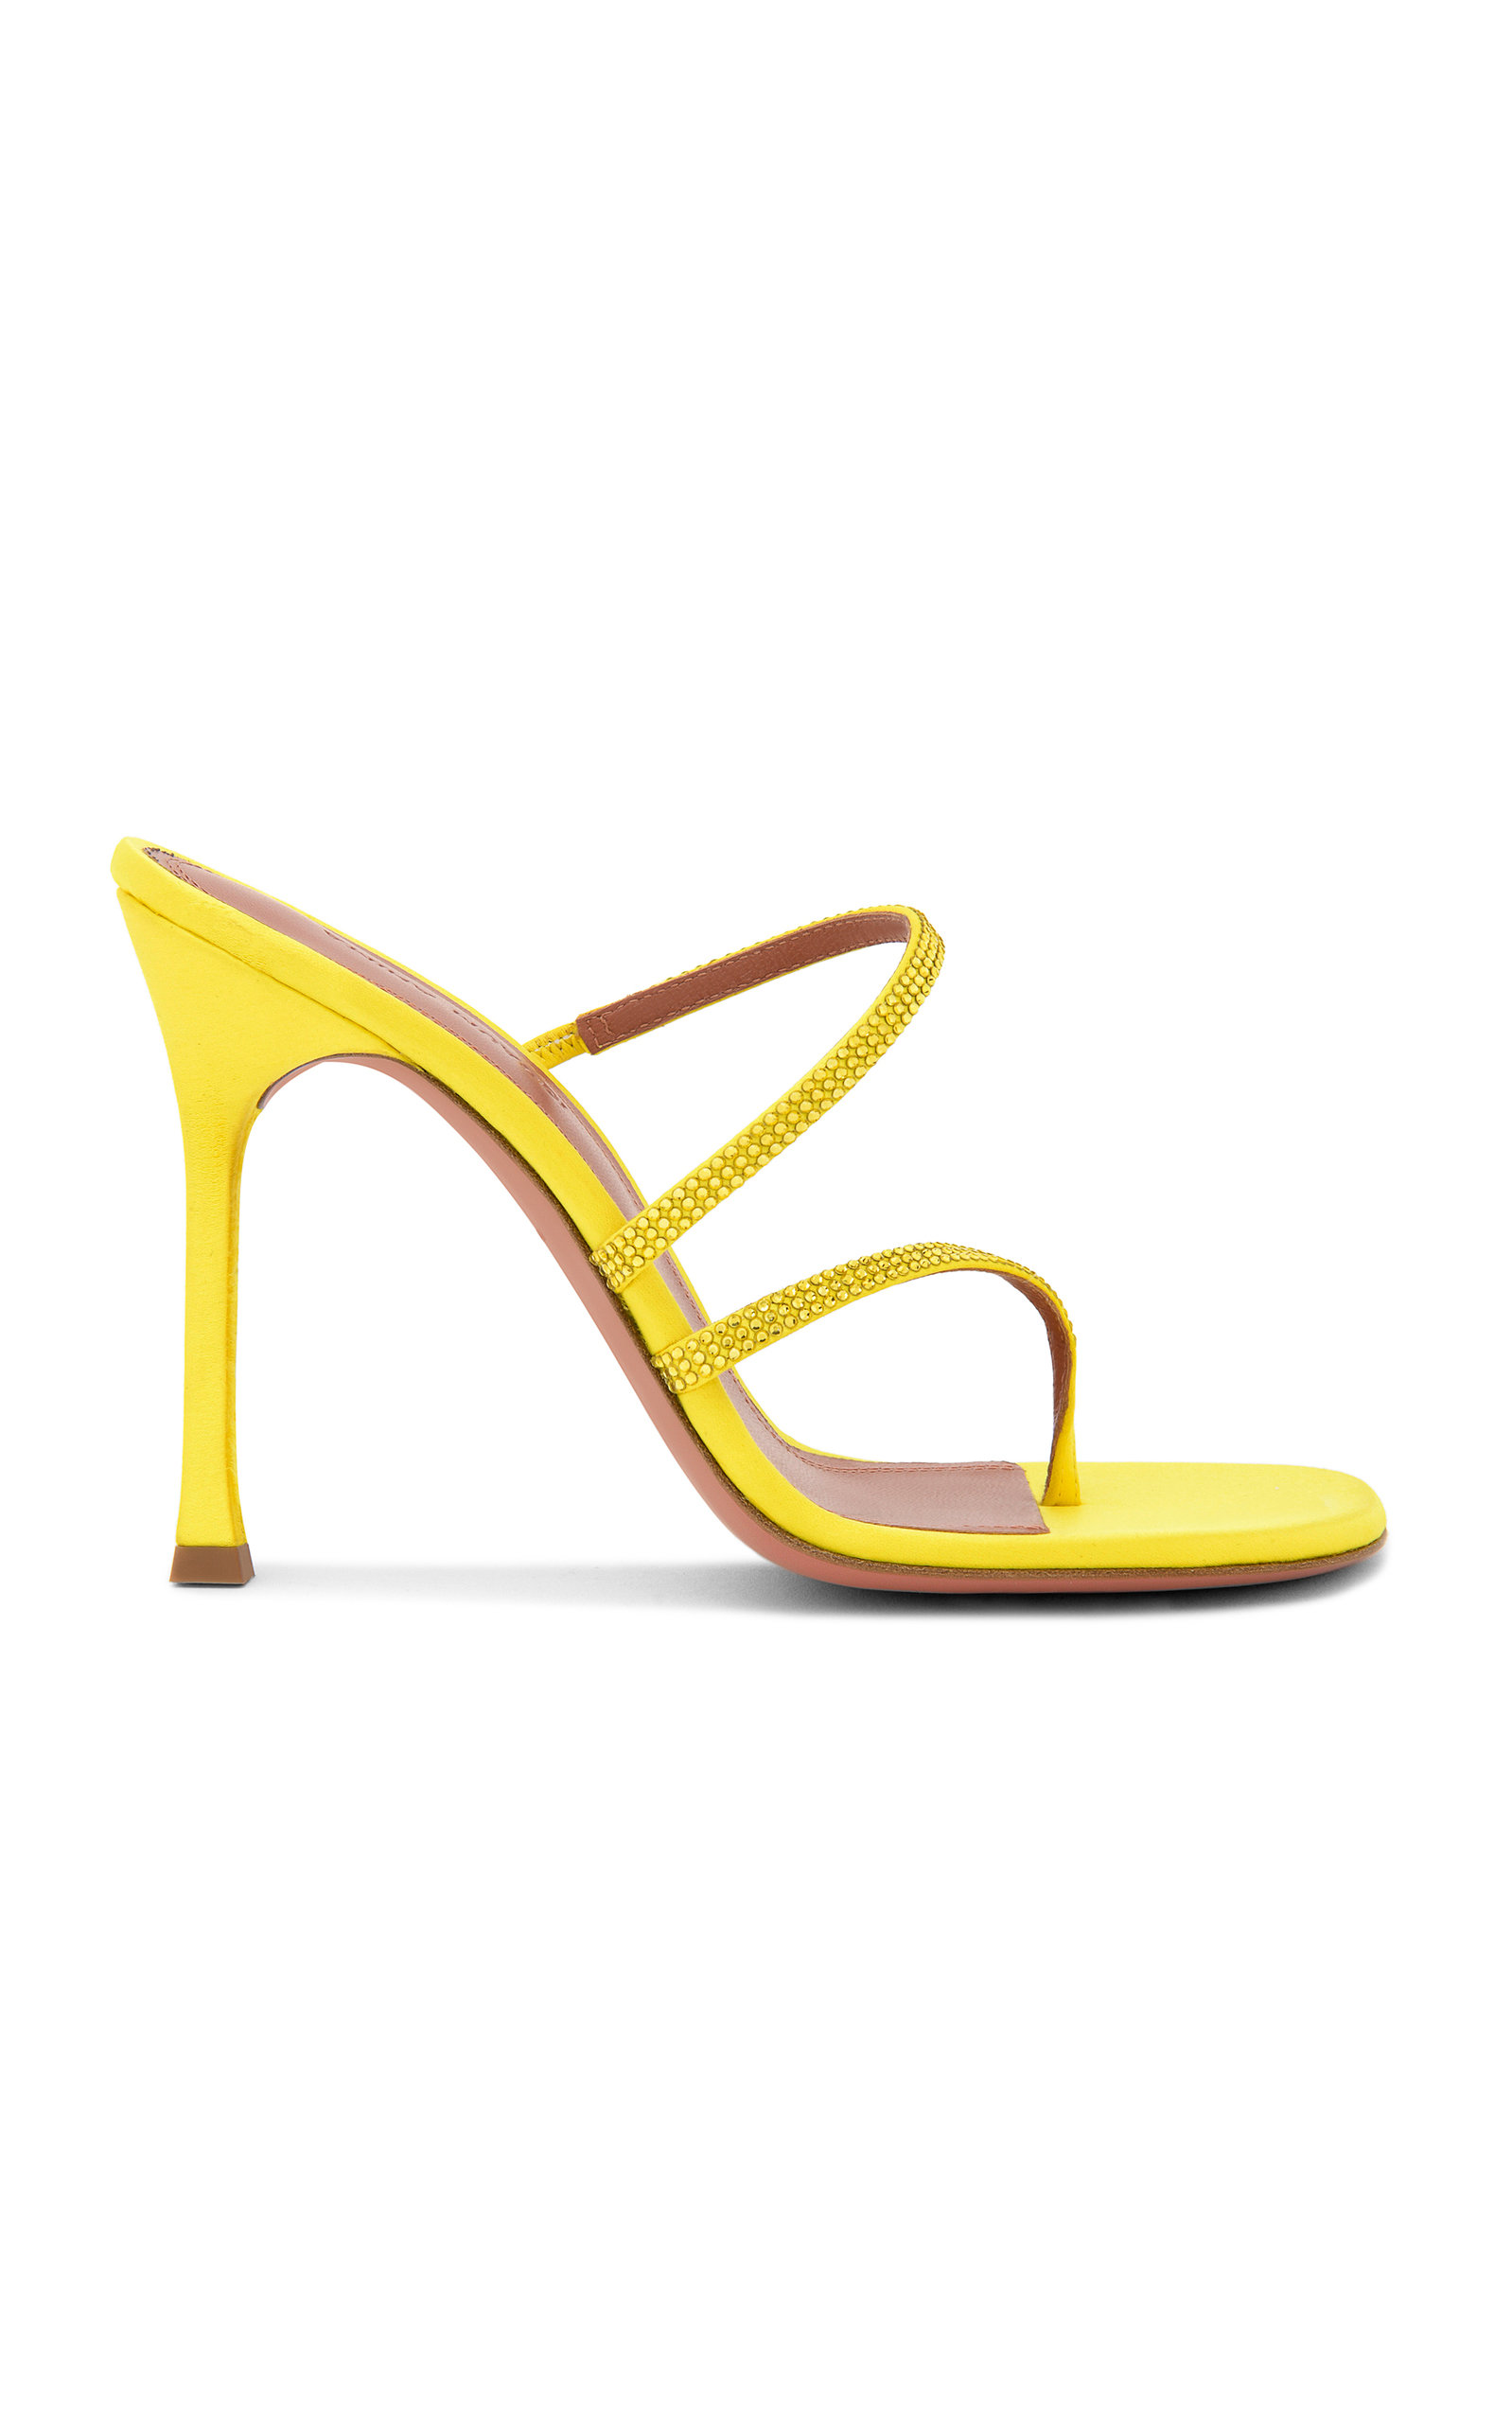 Amina Muaddi - Women's Ami Crystal-Embellished Satin Sandals - Yellow - Moda Operandi